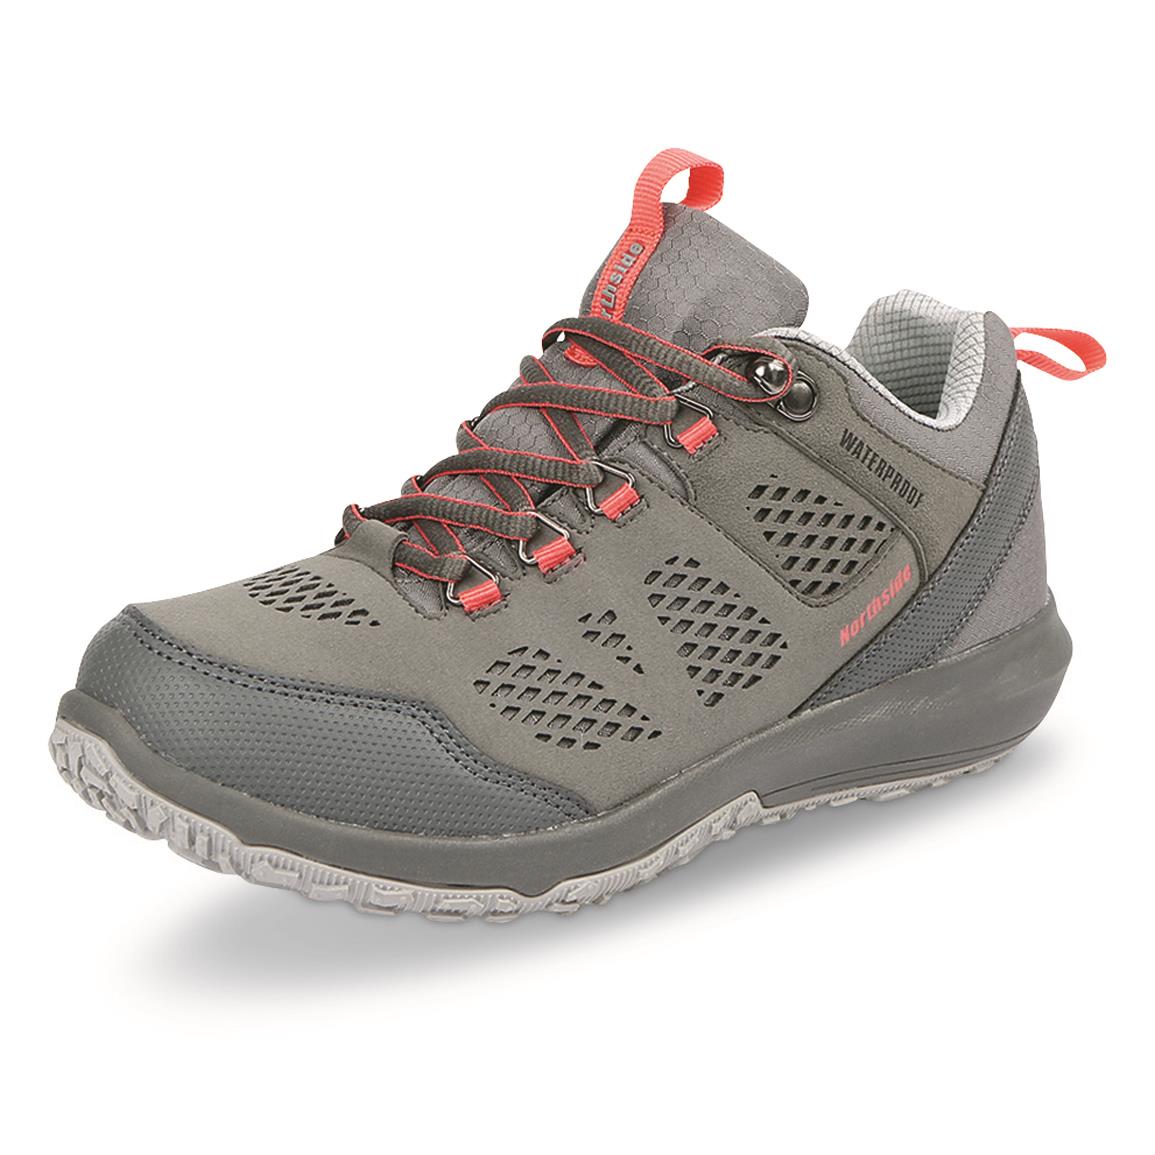 Northside Women's Benton Waterproof Hiking Shoes, Gray/coral